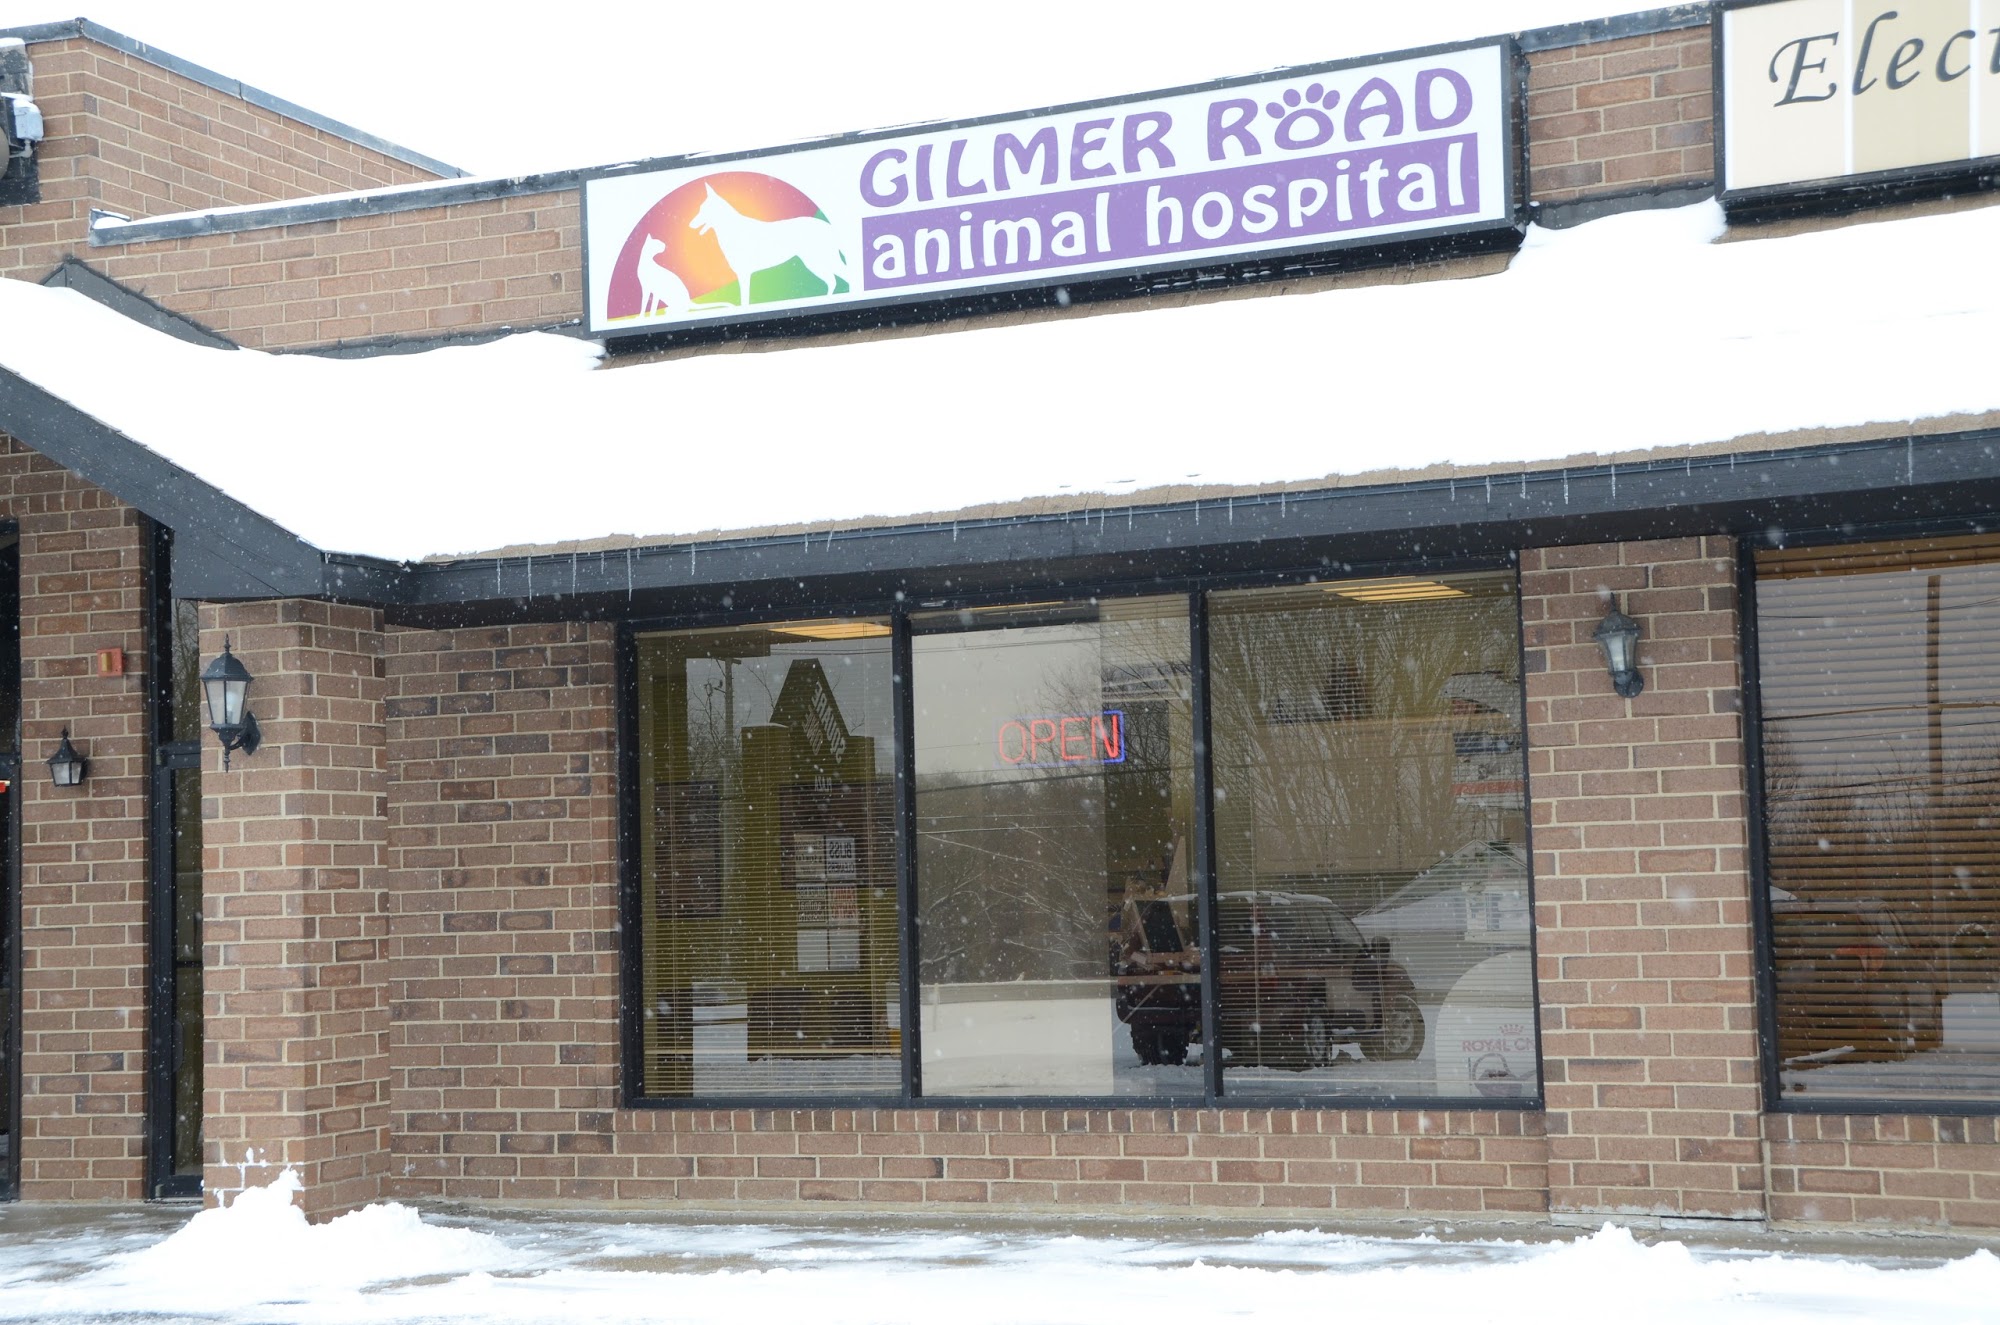 Gilmer Road Animal Hospital